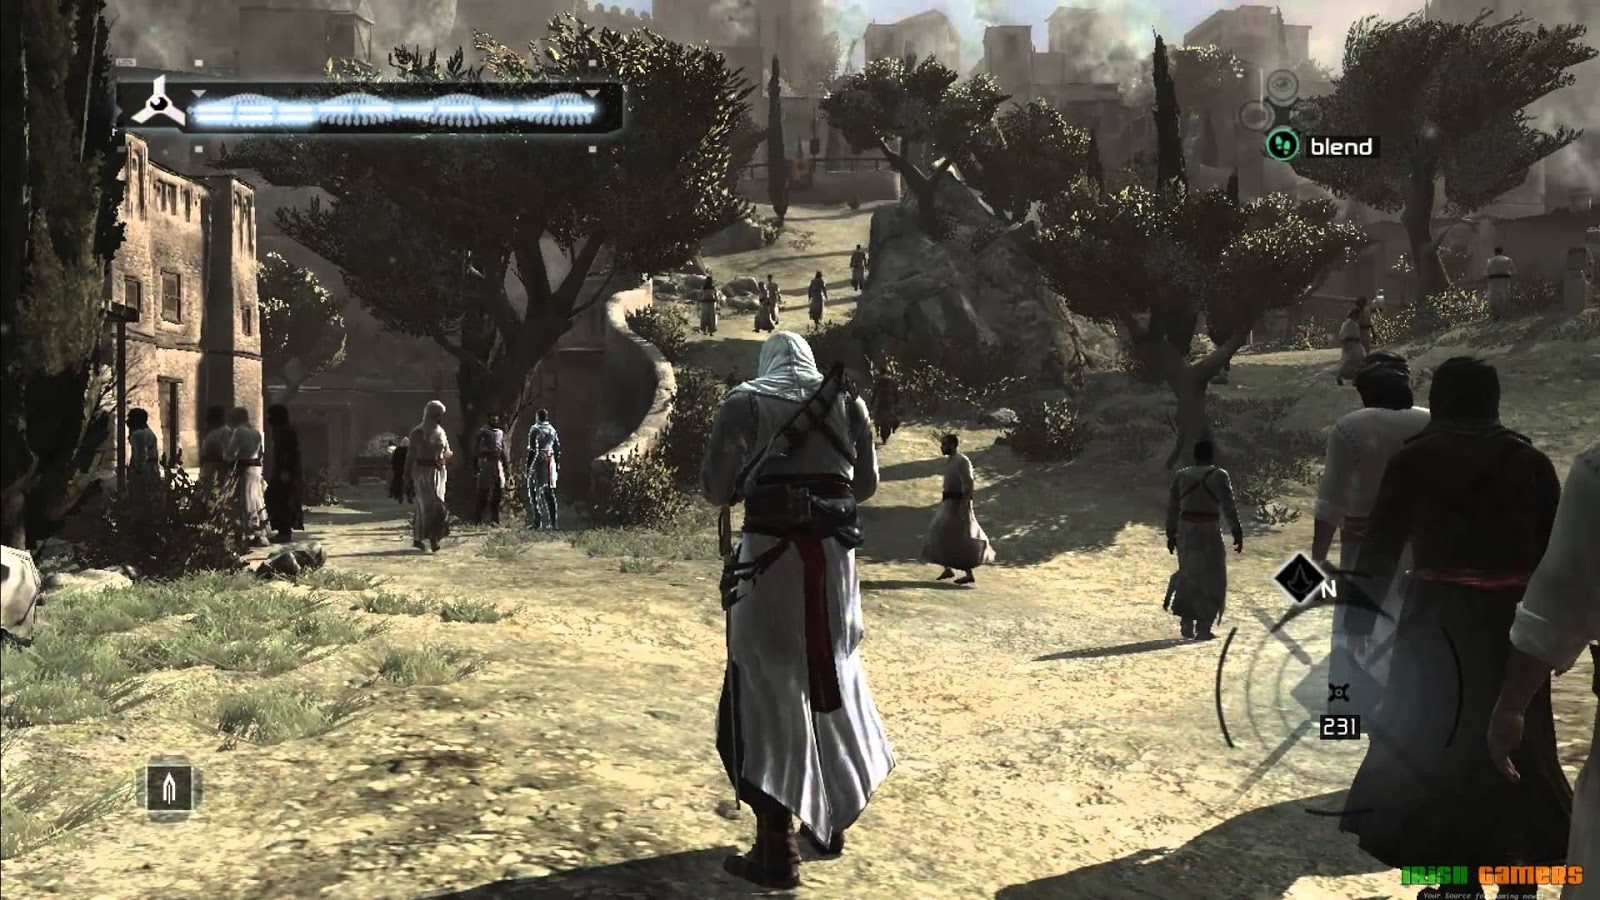 Ассасины игра видео. Assassins Creed 1 геймплей. Assassin's Creed 1 Xbox 360 Gameplay. Ассасин Крид 2007 геймплей. Ассасин Крид 1 геймплей на ПК.